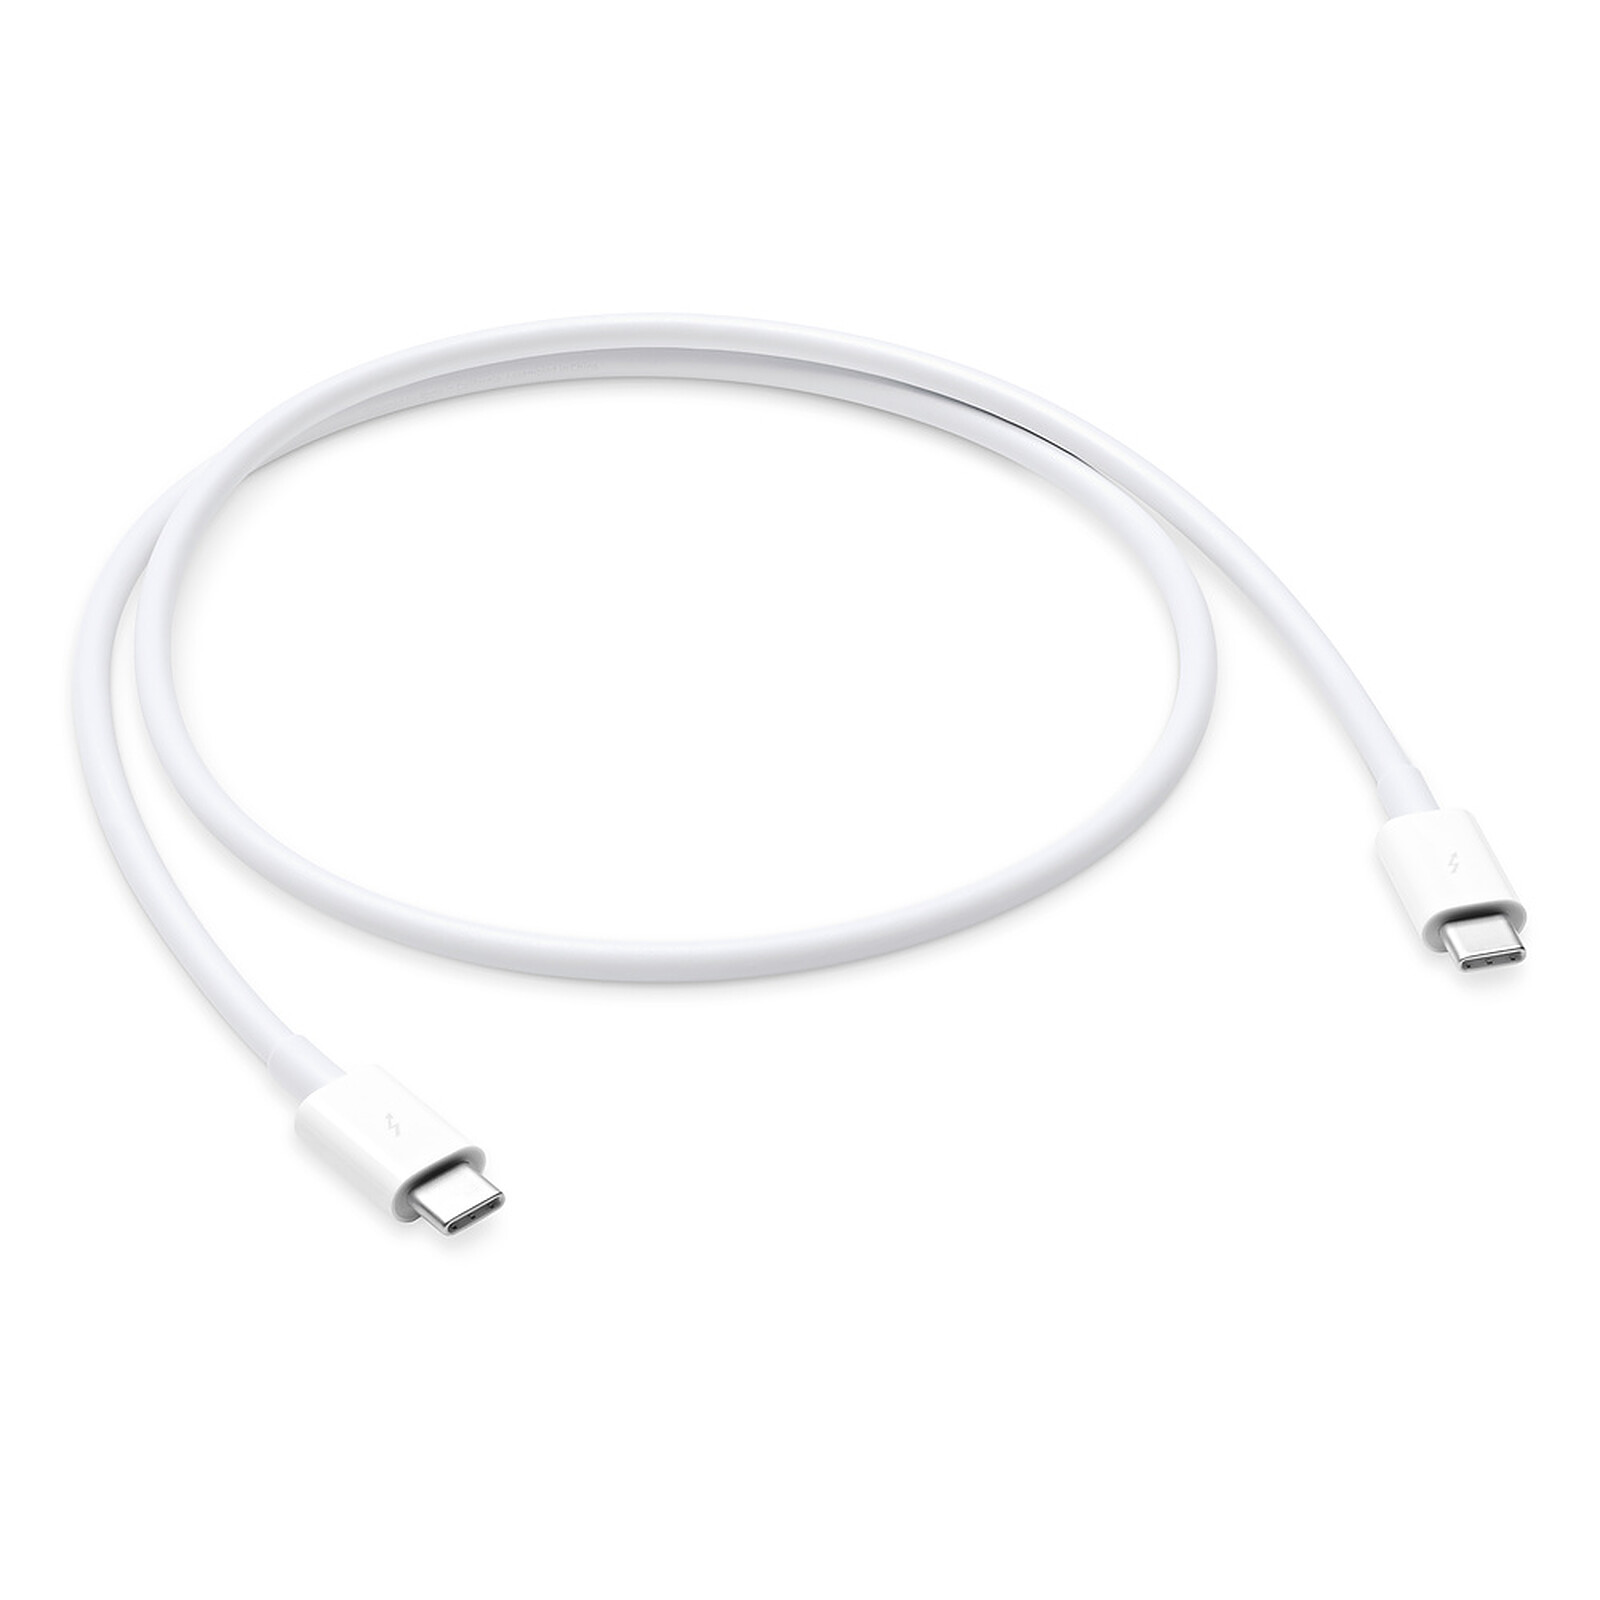 Apple Thunderbolt 4 Pro Cable 1 m Black Braided USB-C Data Transfer Video  Cord